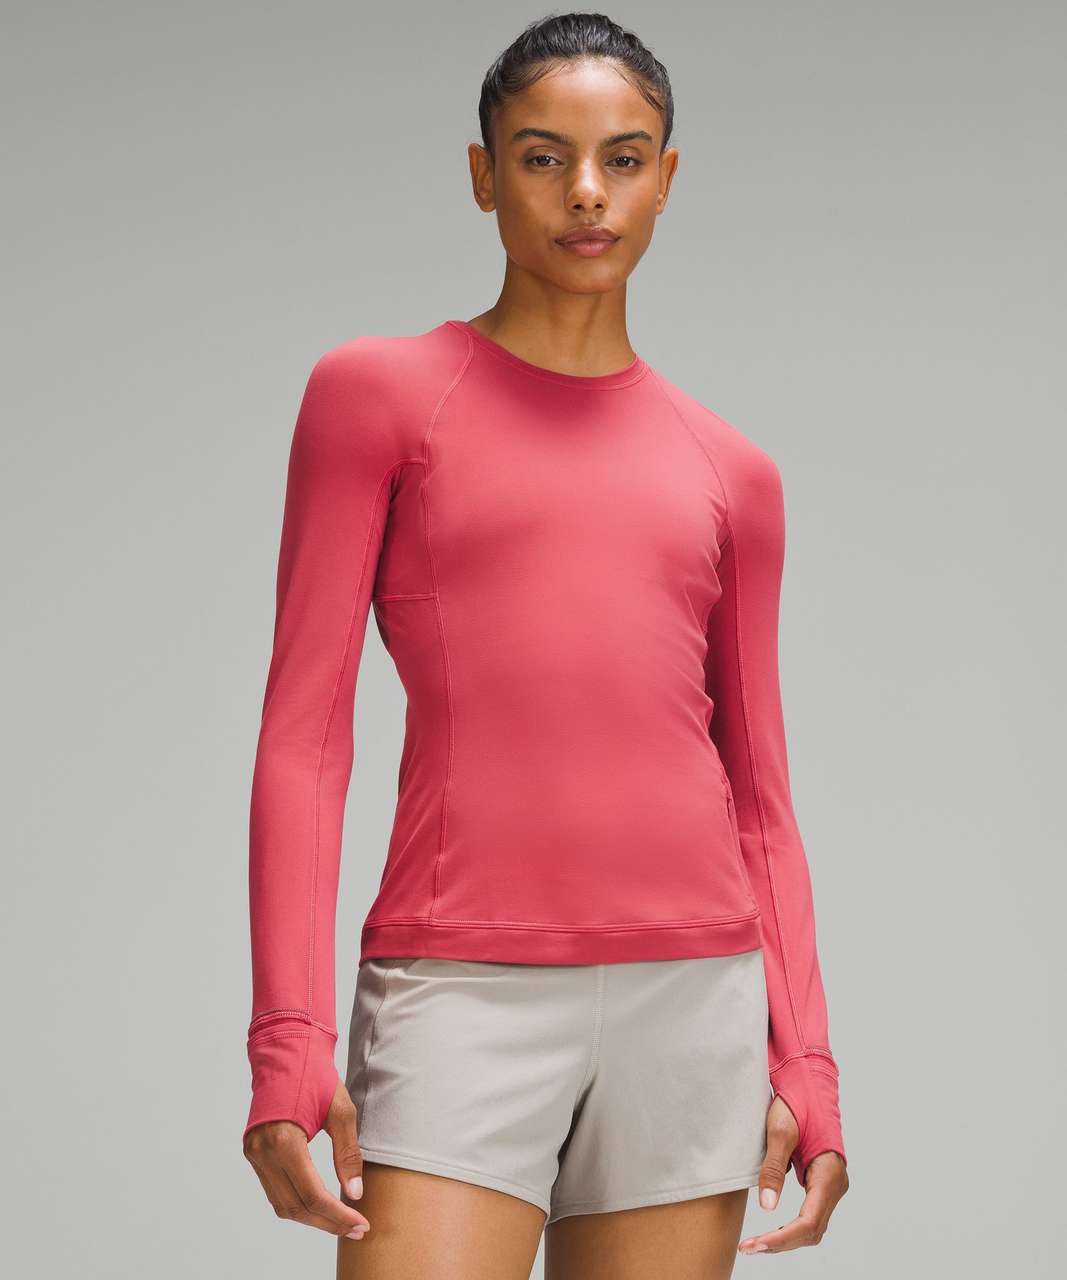 Lululemon It's Rulu Run Long Sleeve NWOT Pink Size 8 - $60 (31% Off Retail)  - From Nicole